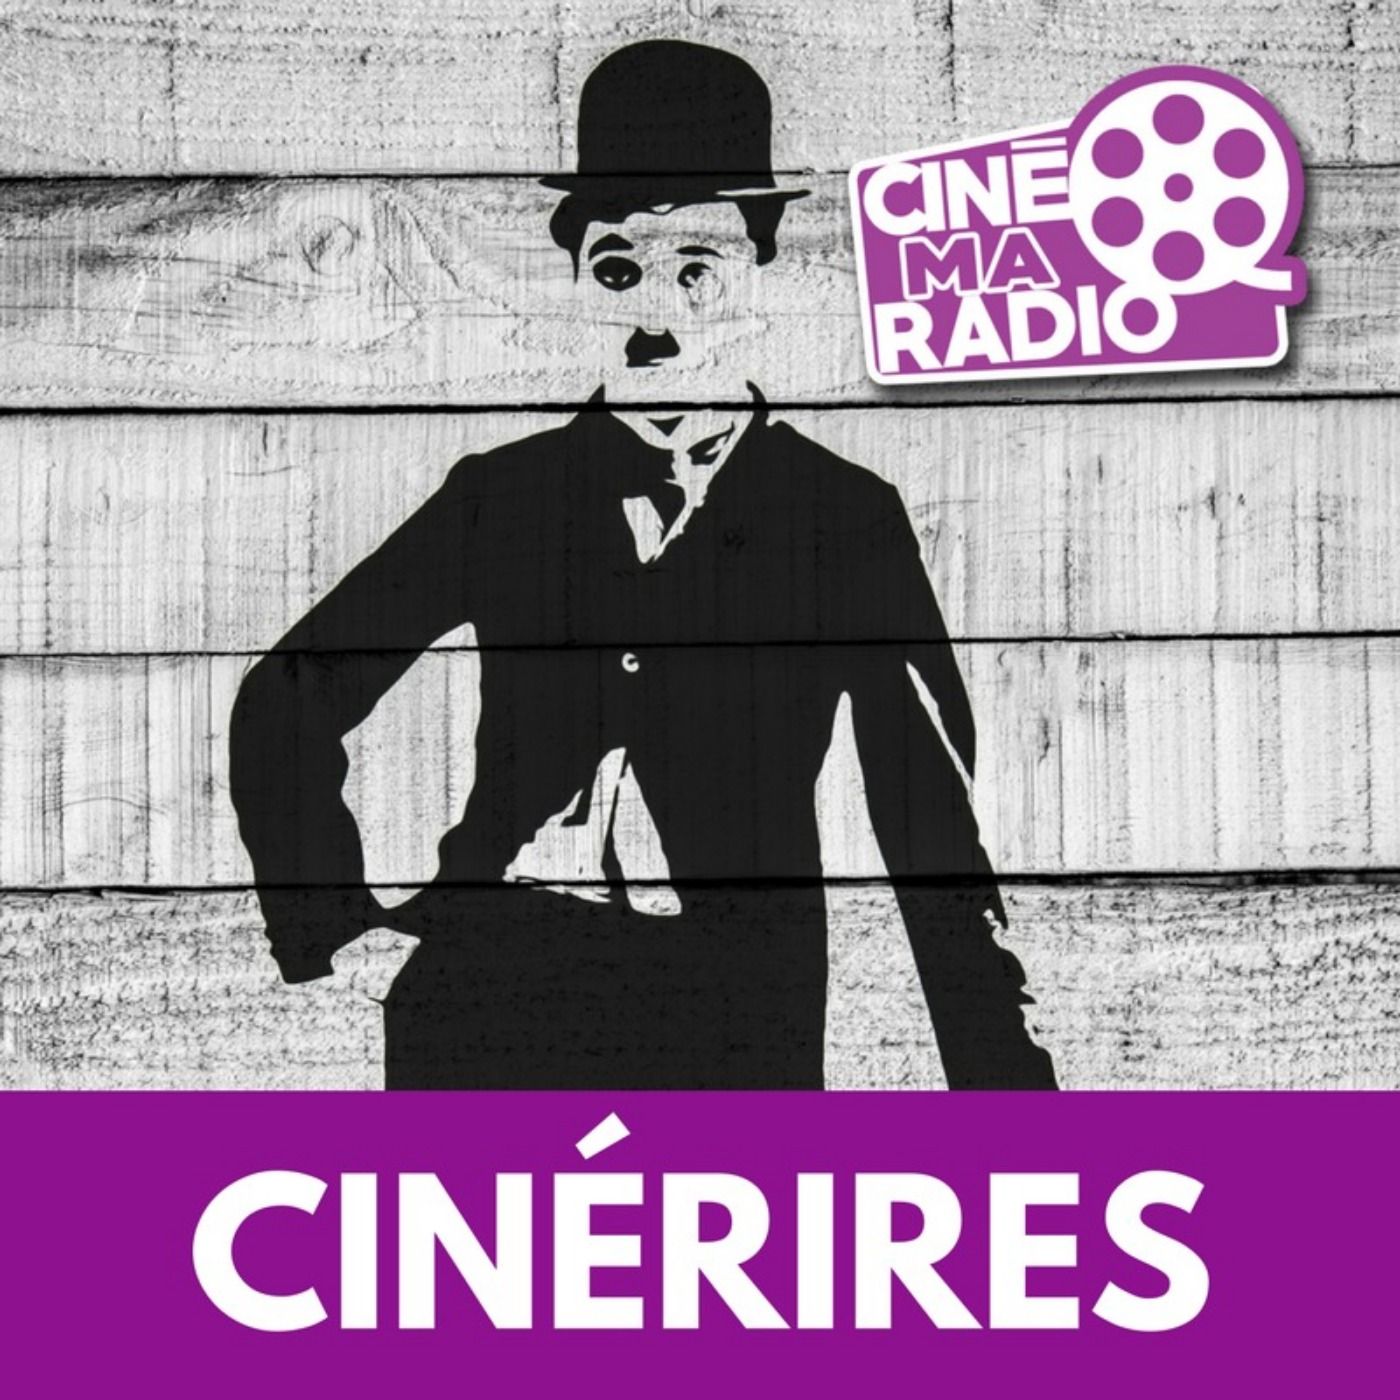 Critique du film BORAT | CinéMaRadio | CinéRires #23